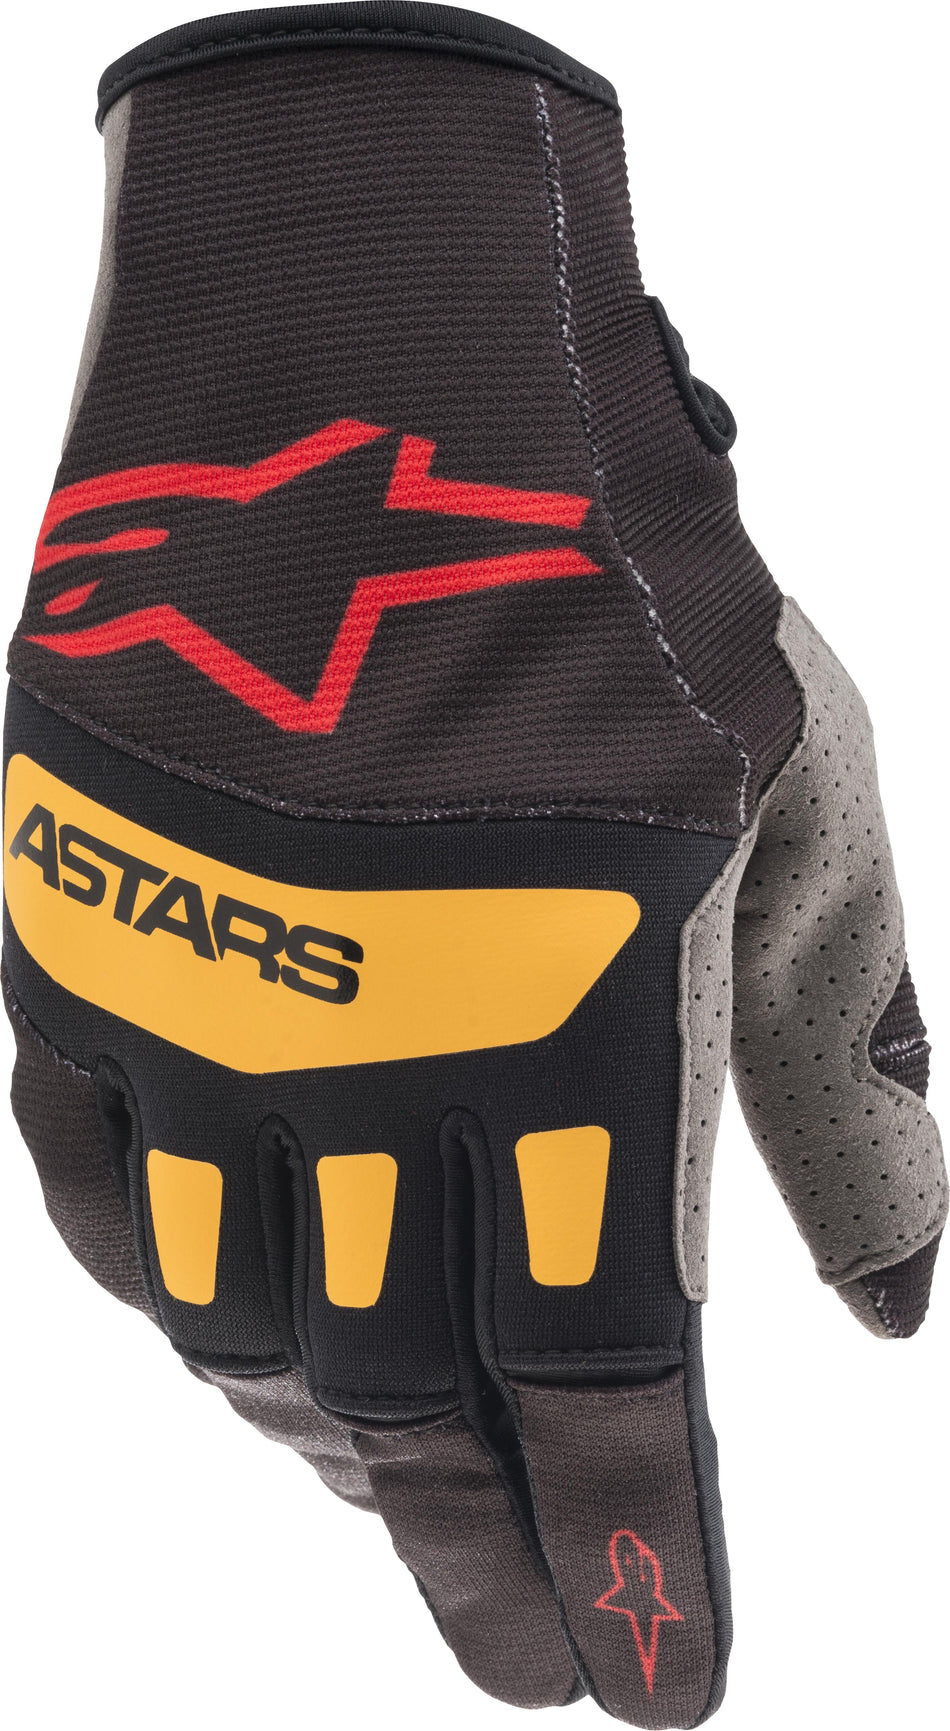 ALPINESTARS Techstar Gloves Black/Bright Red/Orange Lg 3561021-1344-L